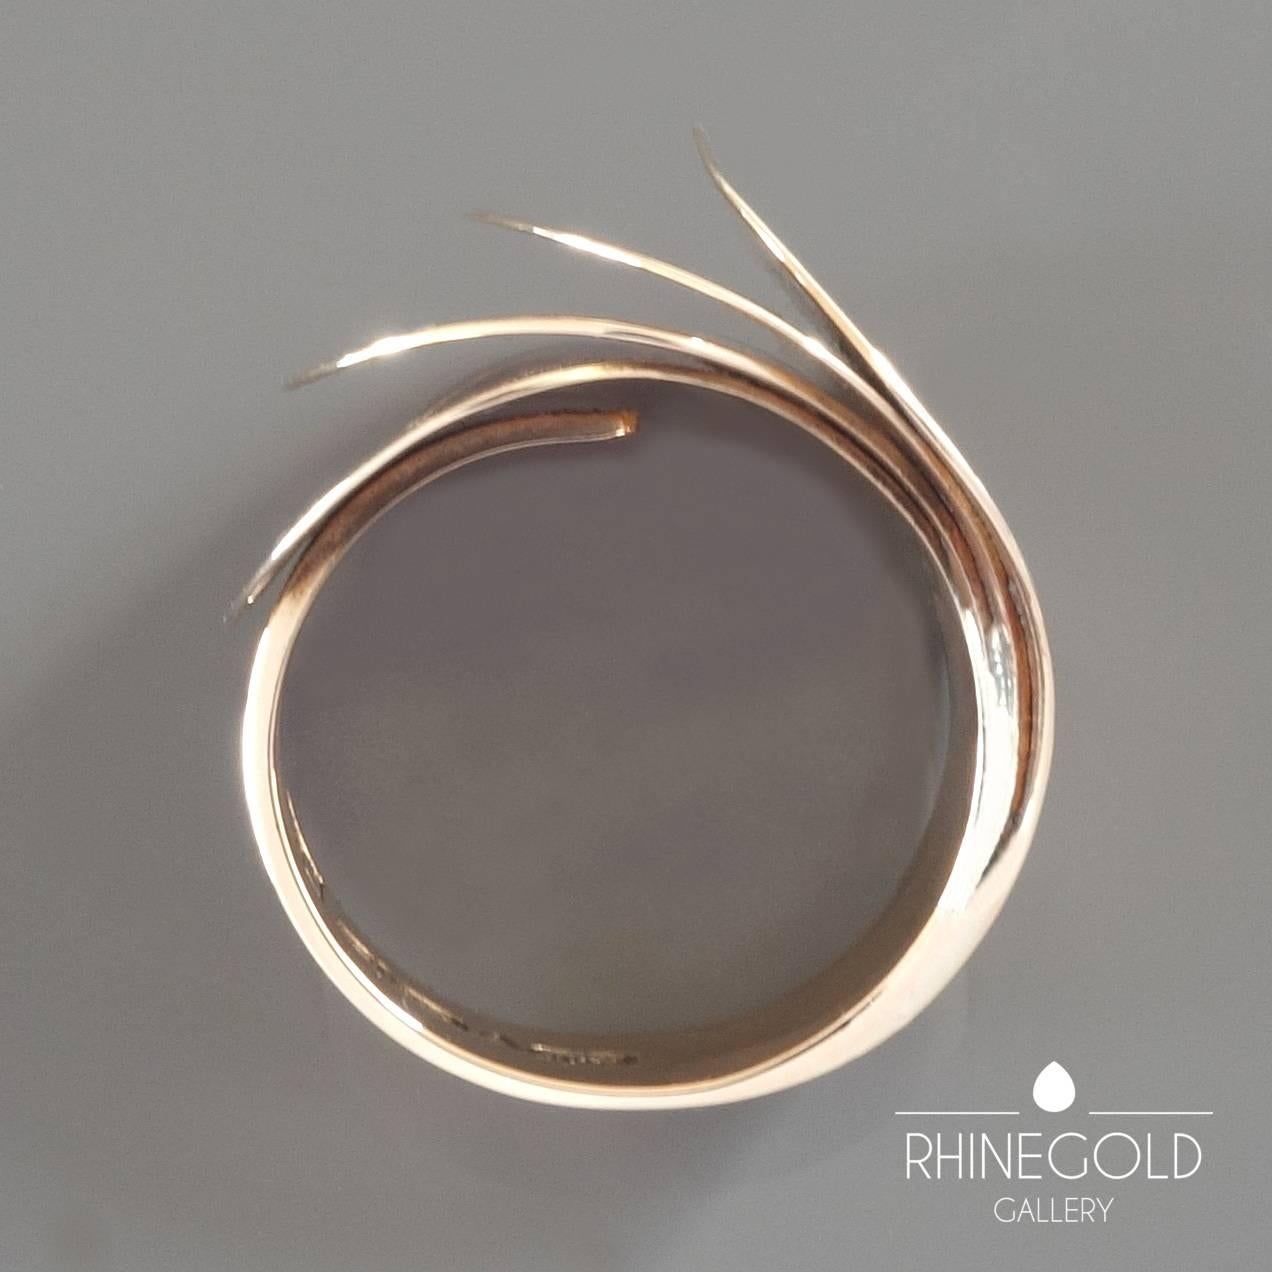 1970s Urpo Kajander for Kaunis Koru Finnish Modernist Gold Ring
14k rose gold 
Ring head 2.1 cm wide (approx. 13/16”) 
Ring size: adjustable, current size: Ø 18.1 mm = EU 57 / US 8 / ASIA 16
Weight: 13.4 grams
Marks: ‘UJK’, [Finnish national mark],